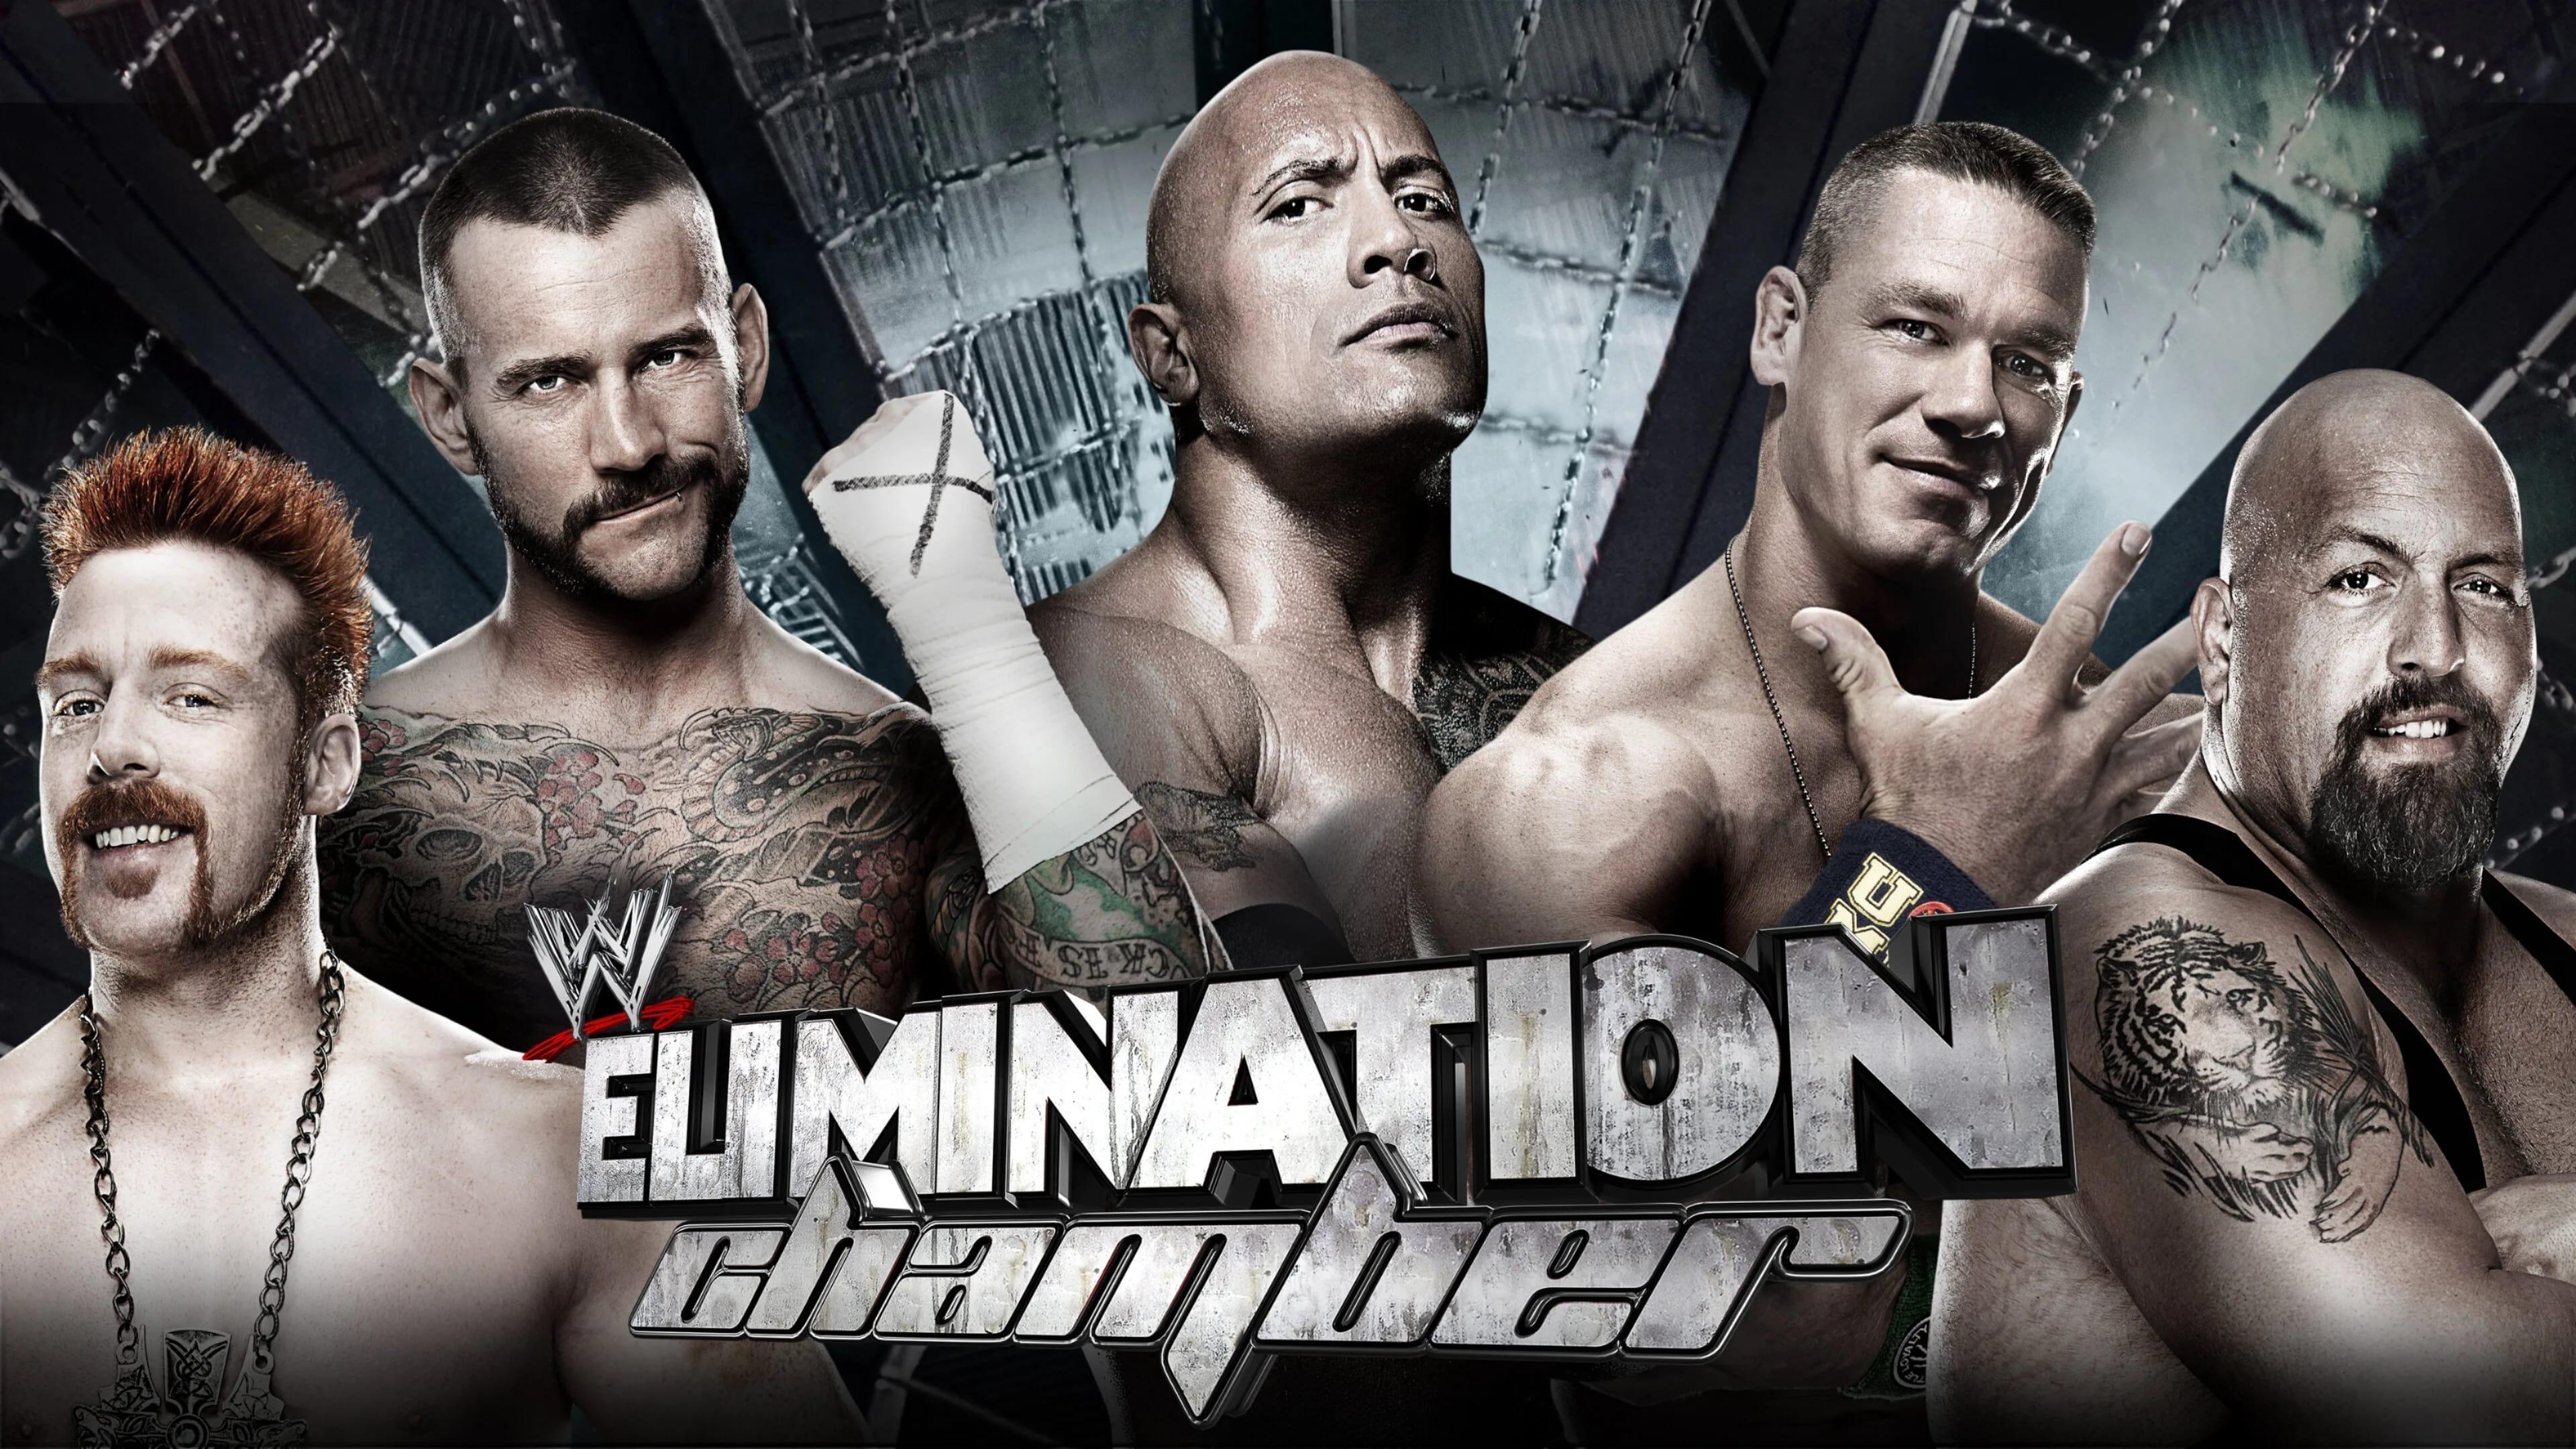 WWE Elimination Chamber 2013 backdrop